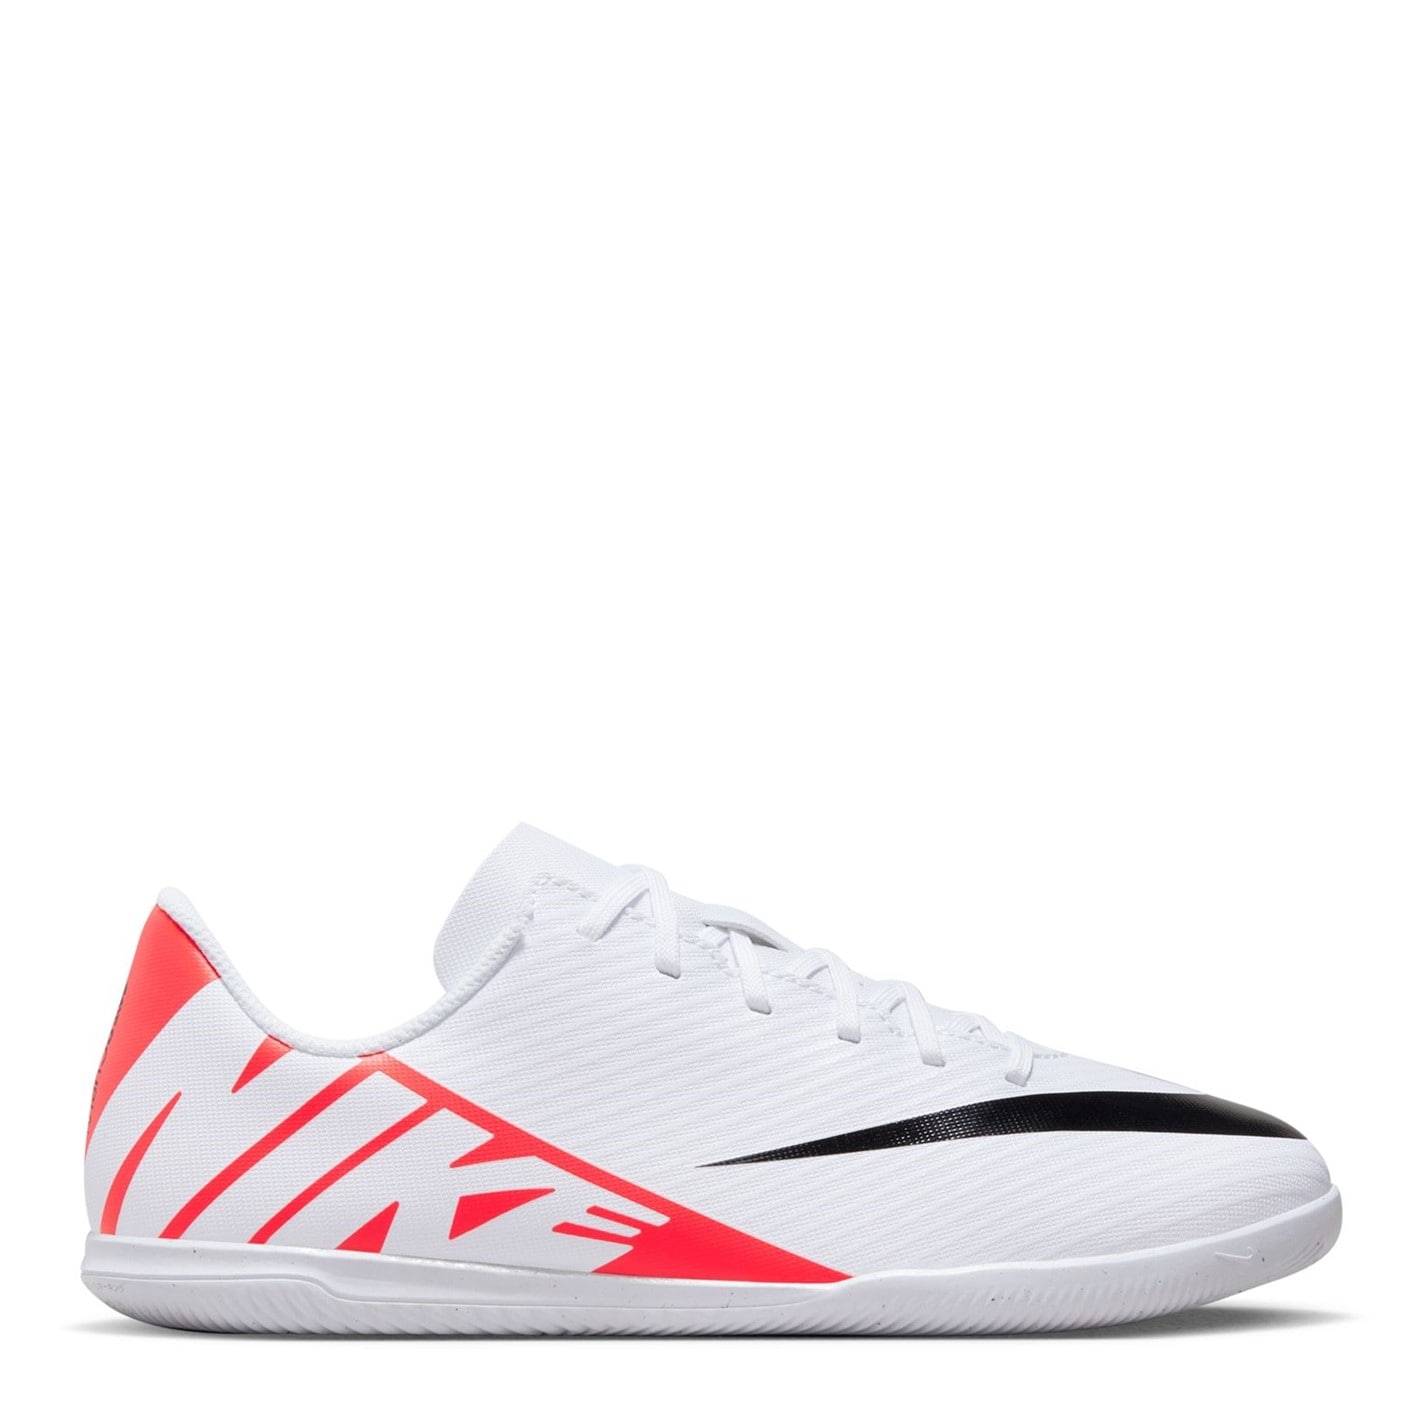 Adidasi fotbal de sala Nike Mercurial Vapor Club pentru copii rosu inchis alb